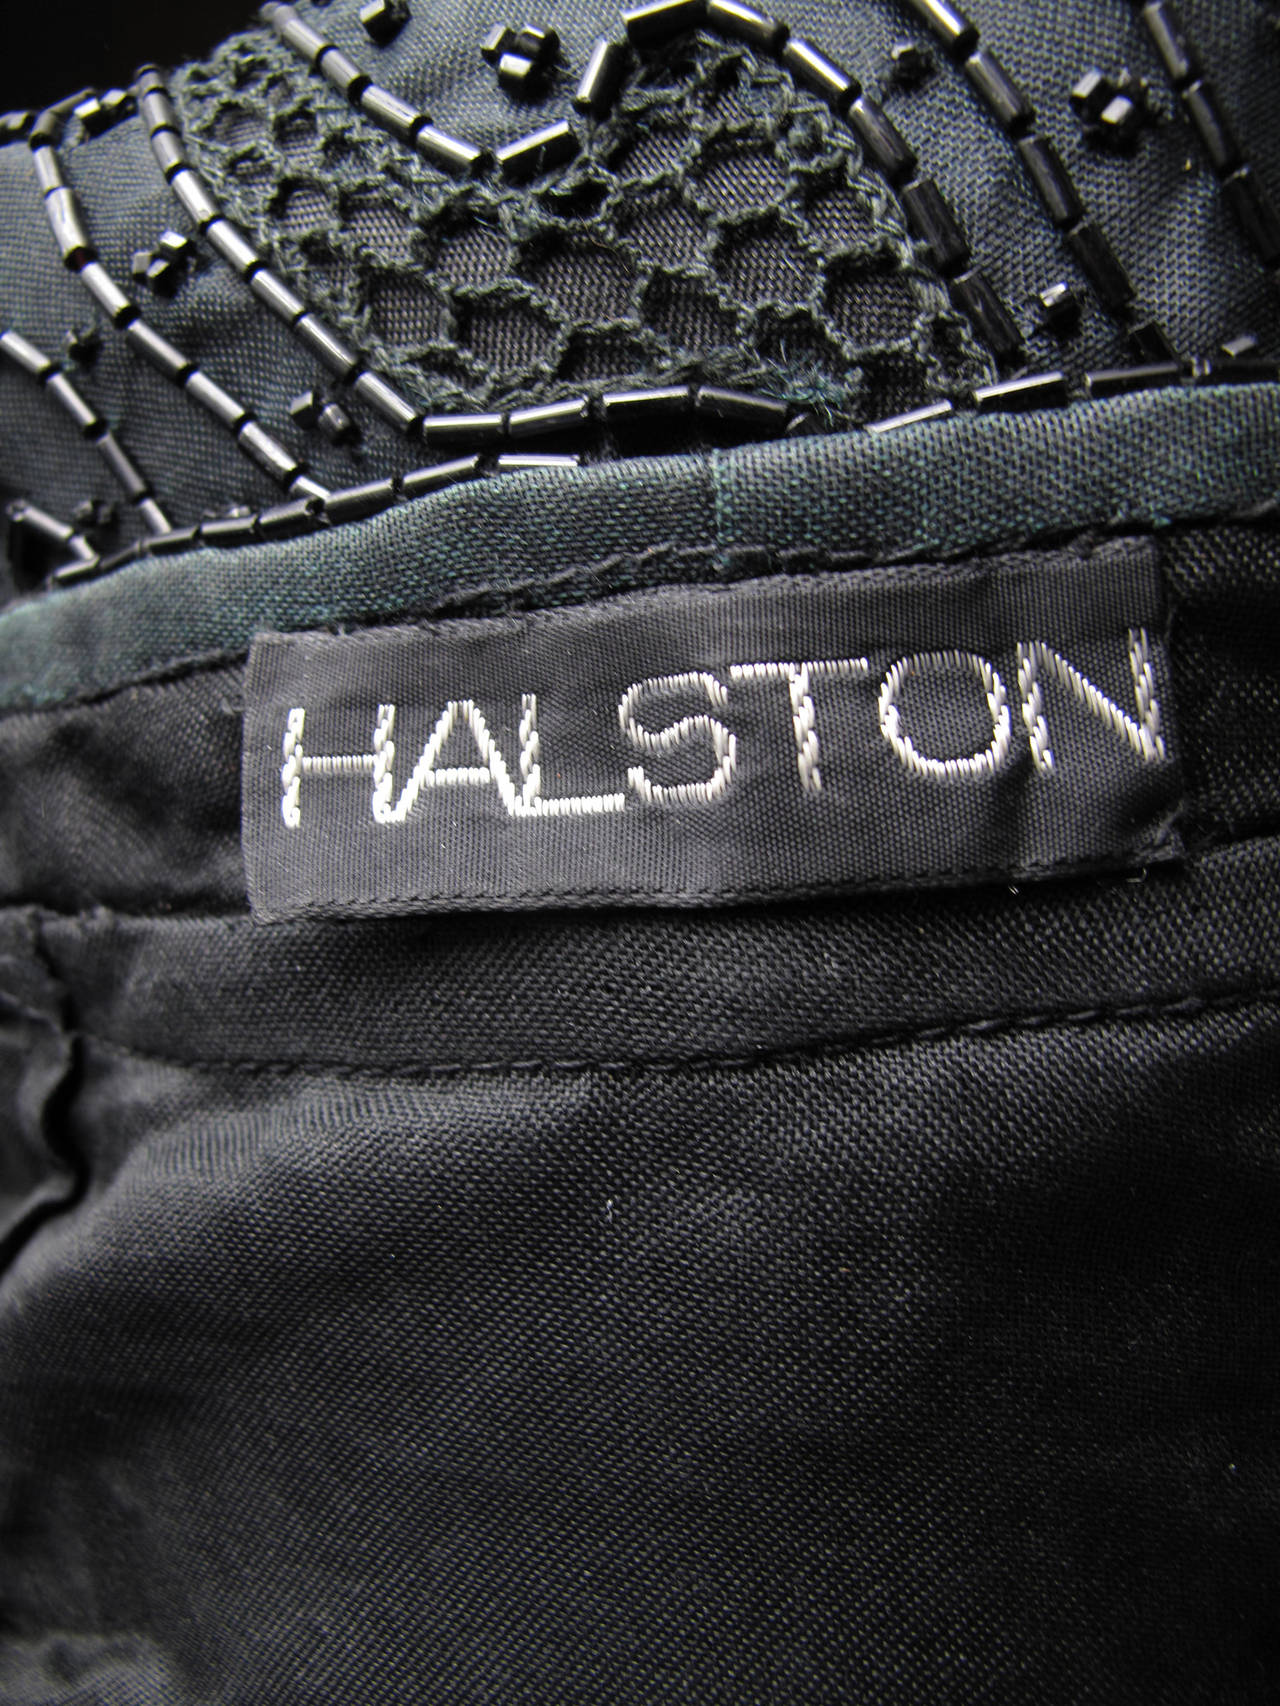 Rare Late 70s - early 80s Halston Beaded & Crochet Jacket. Condition: Very good. 
41" bust, 42" waist, 18.5" sleeve, 16"shoulder, 40" length.  Size 6